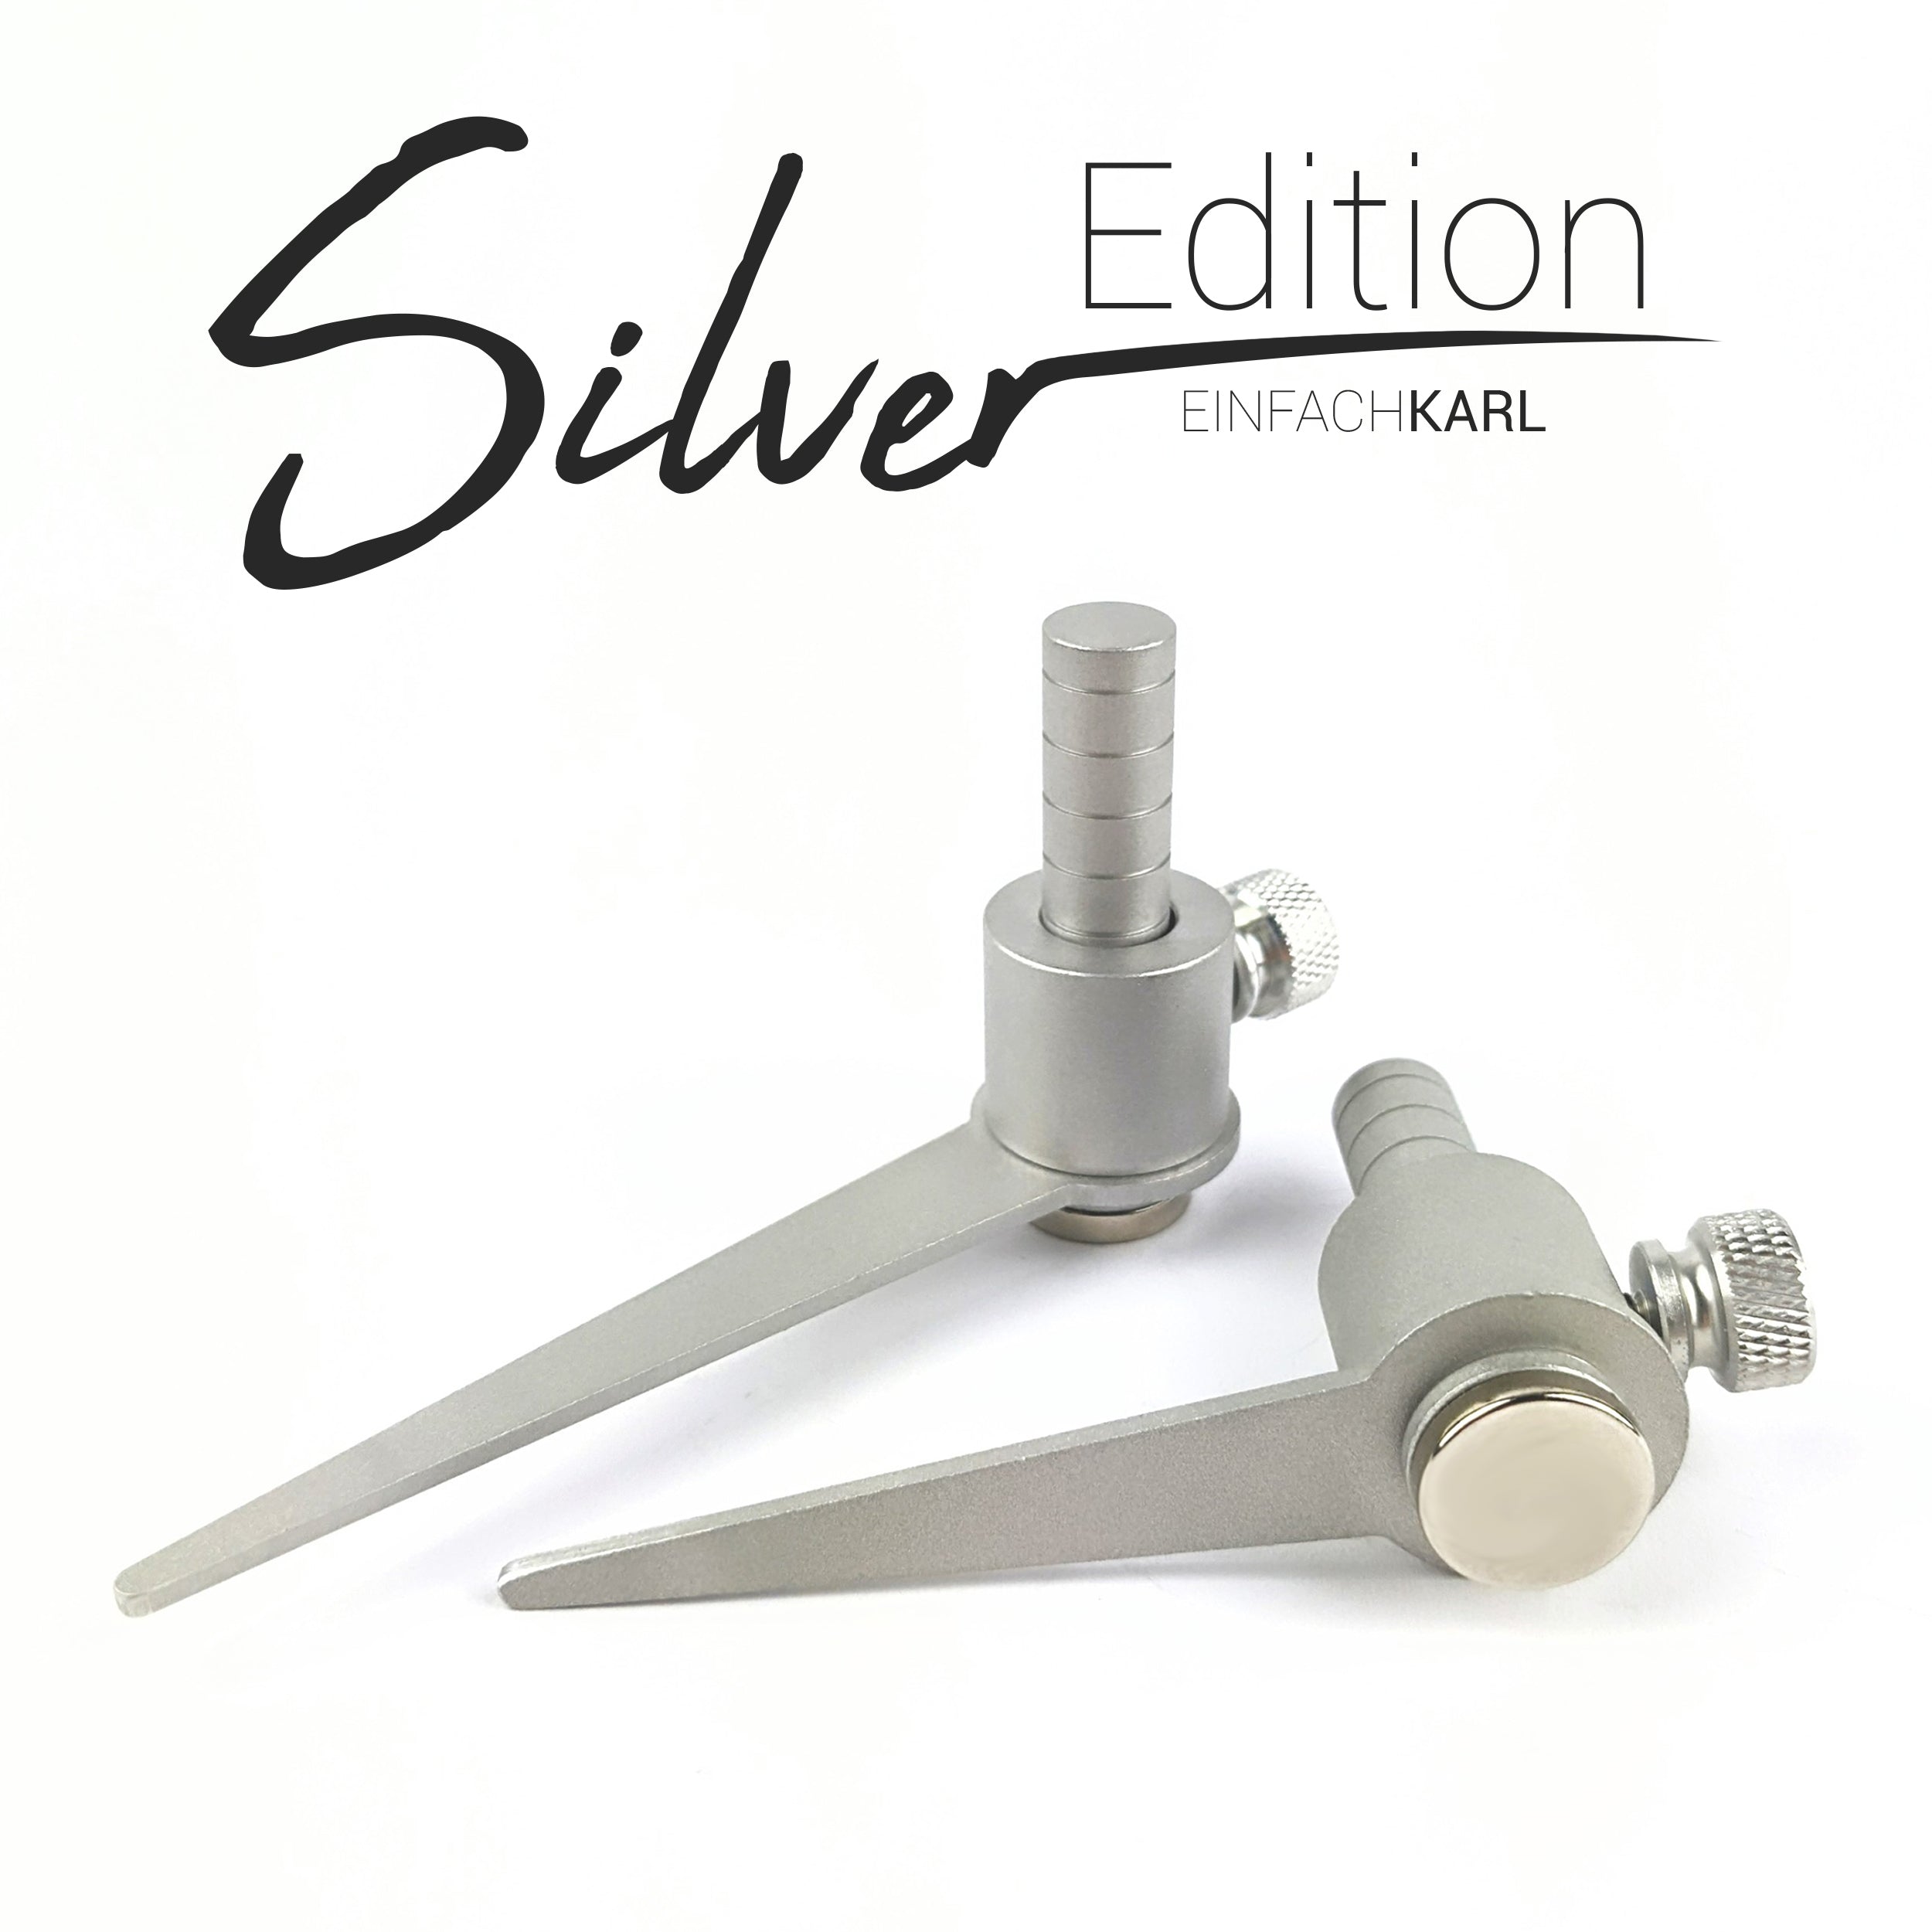 Karl (Silver-Edition)